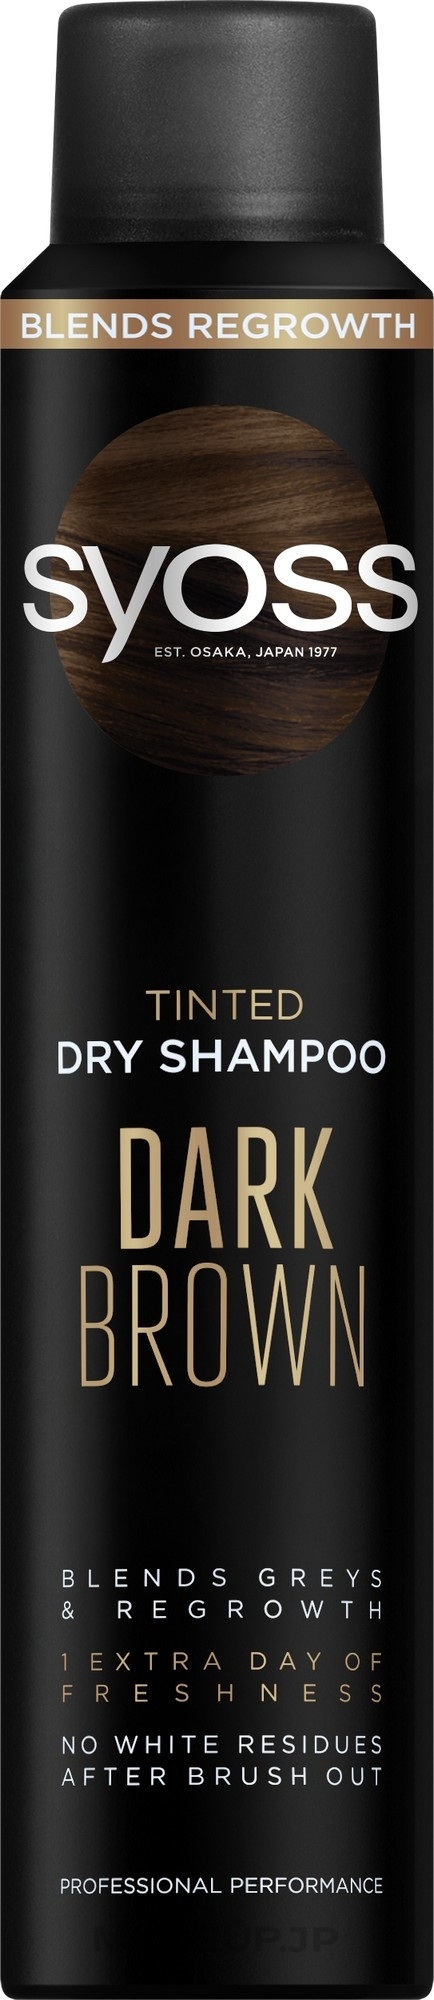 Tinted Dry Shampoo for Dark Hair - Syoss Tined Dry Shampoo — photo Dark Brown